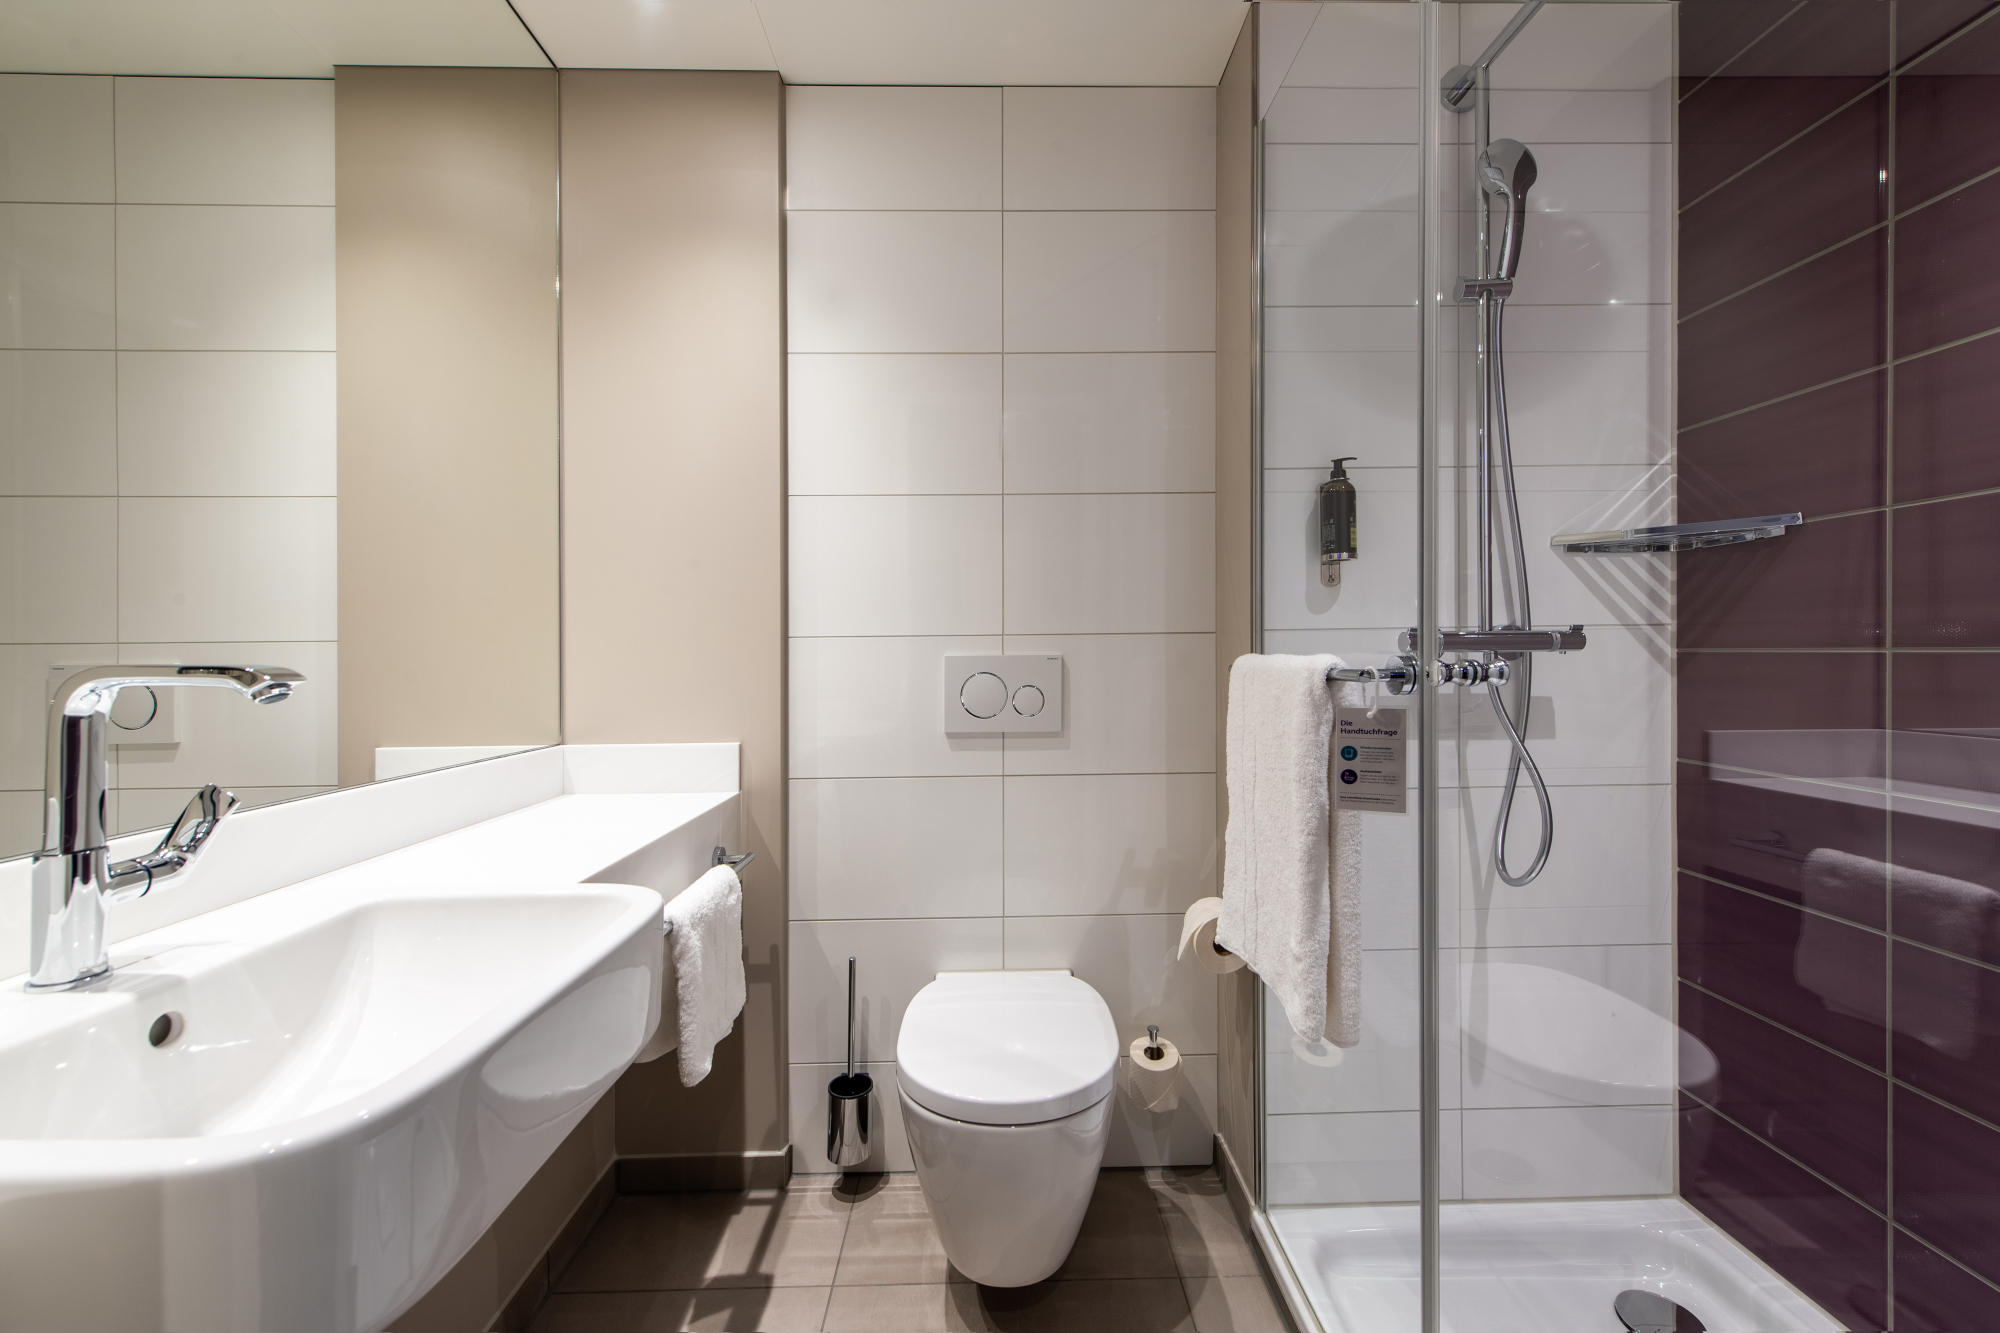 Premier Inn Germany bathroom